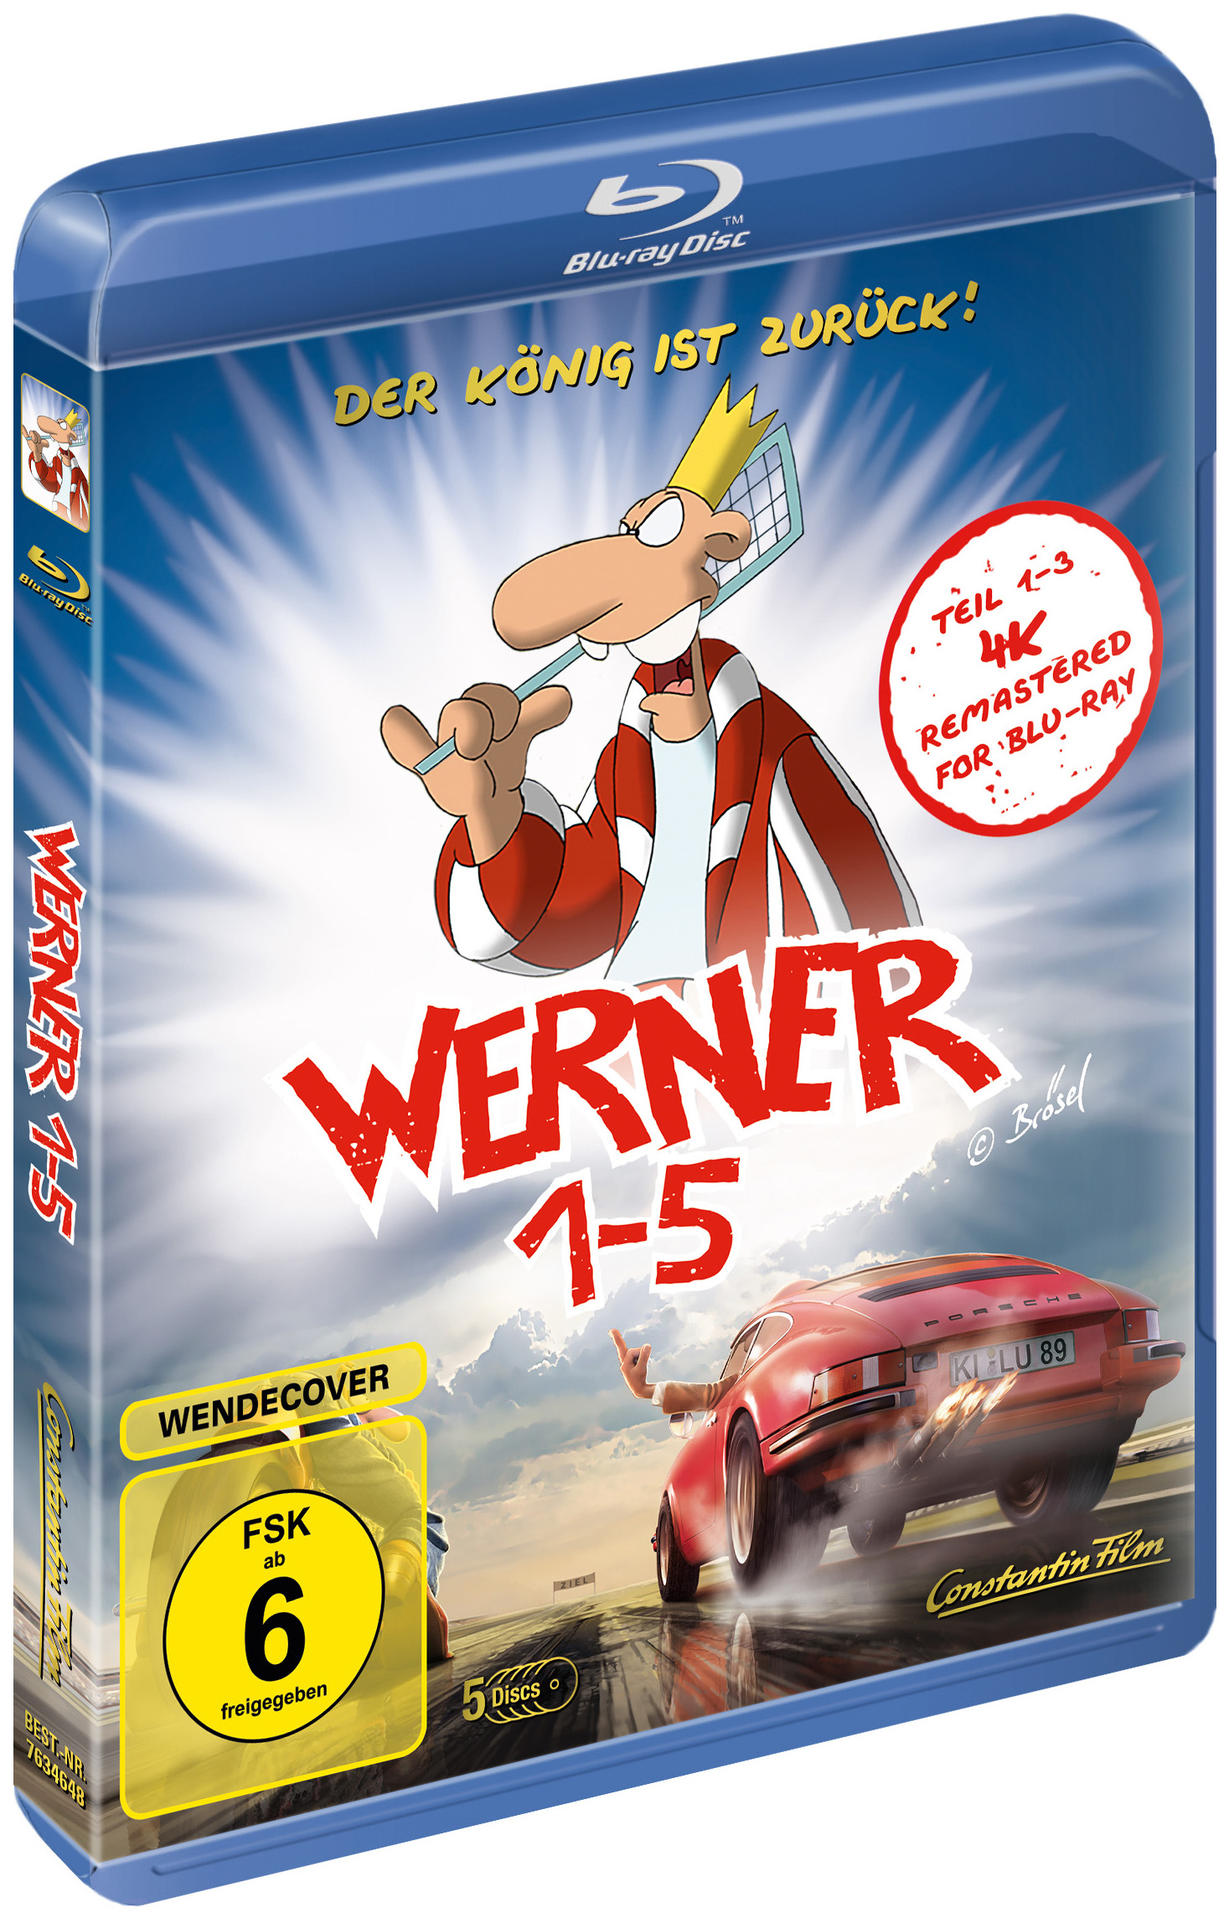 Königbox Blu-ray Werner 1-5